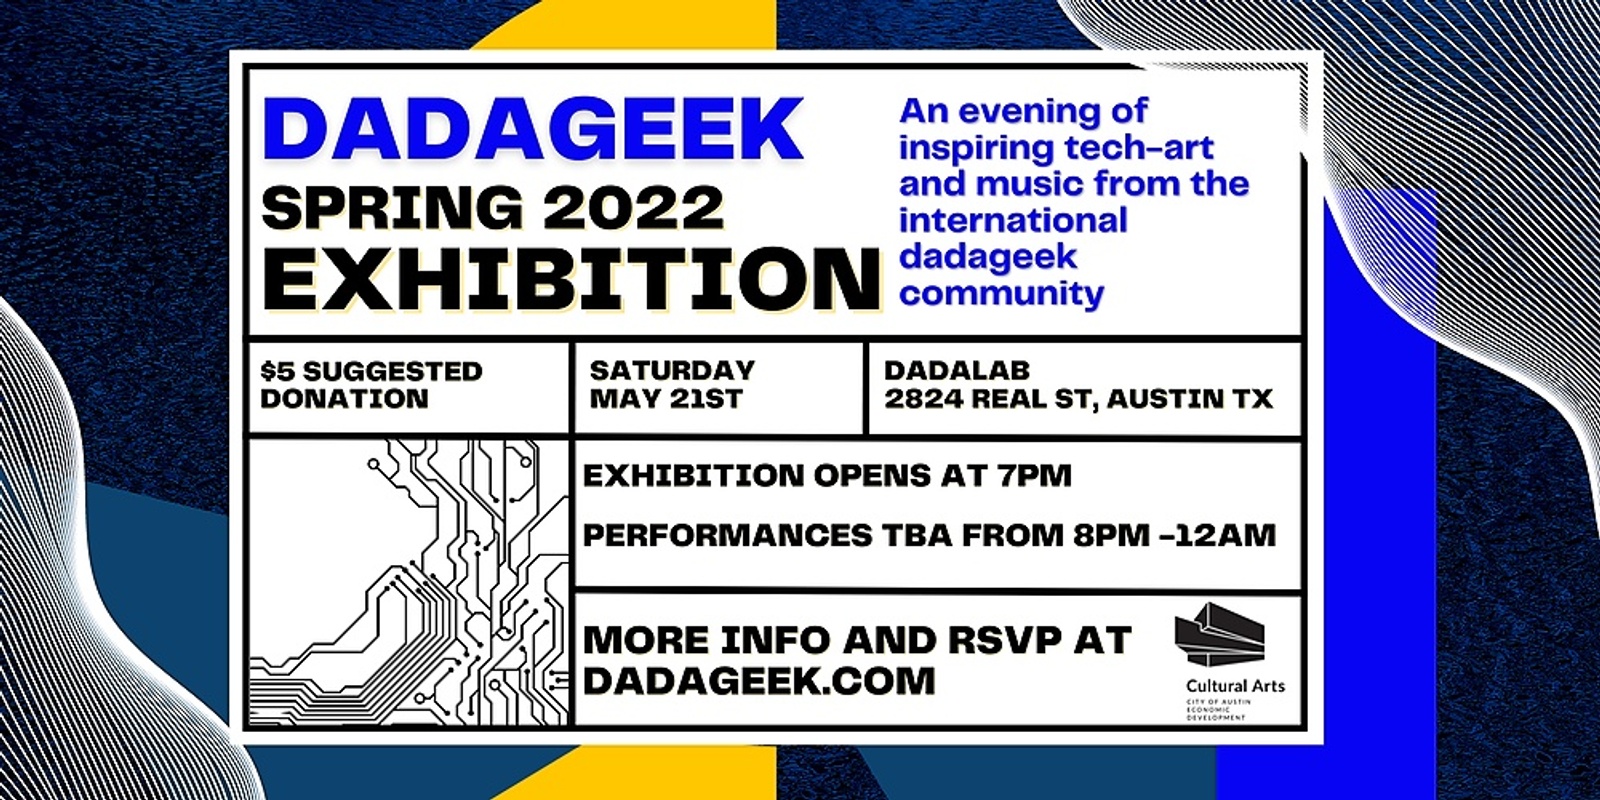 Banner image for dadageek Spring 2022 Exhibition